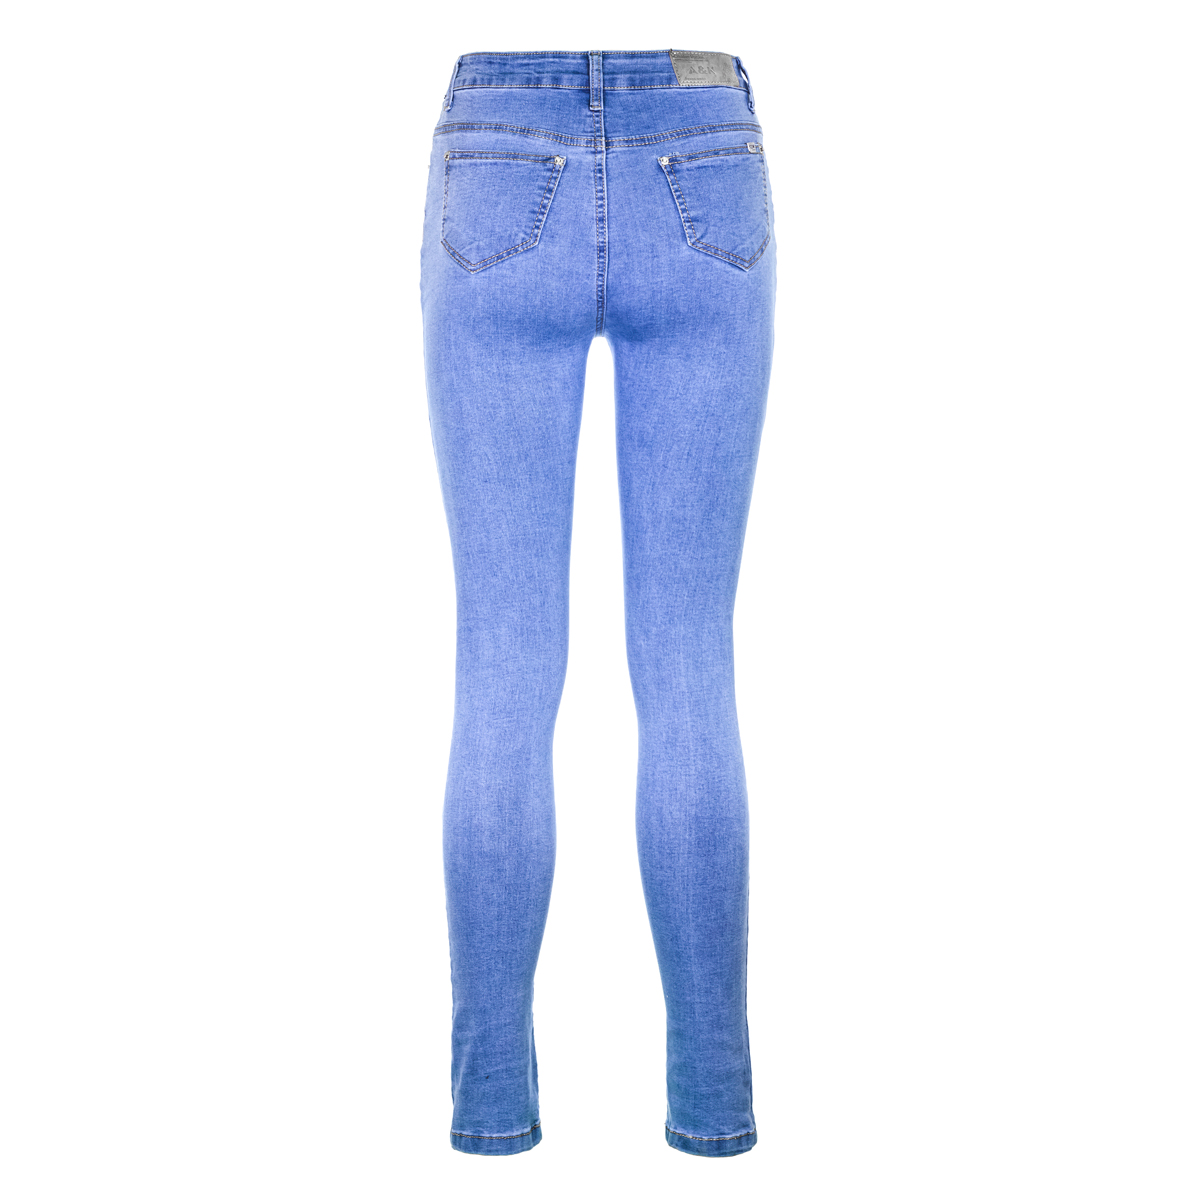 Жен. джинсы арт. 12-0155 Голубой р. 27 Китай, размер 27 - фото 3